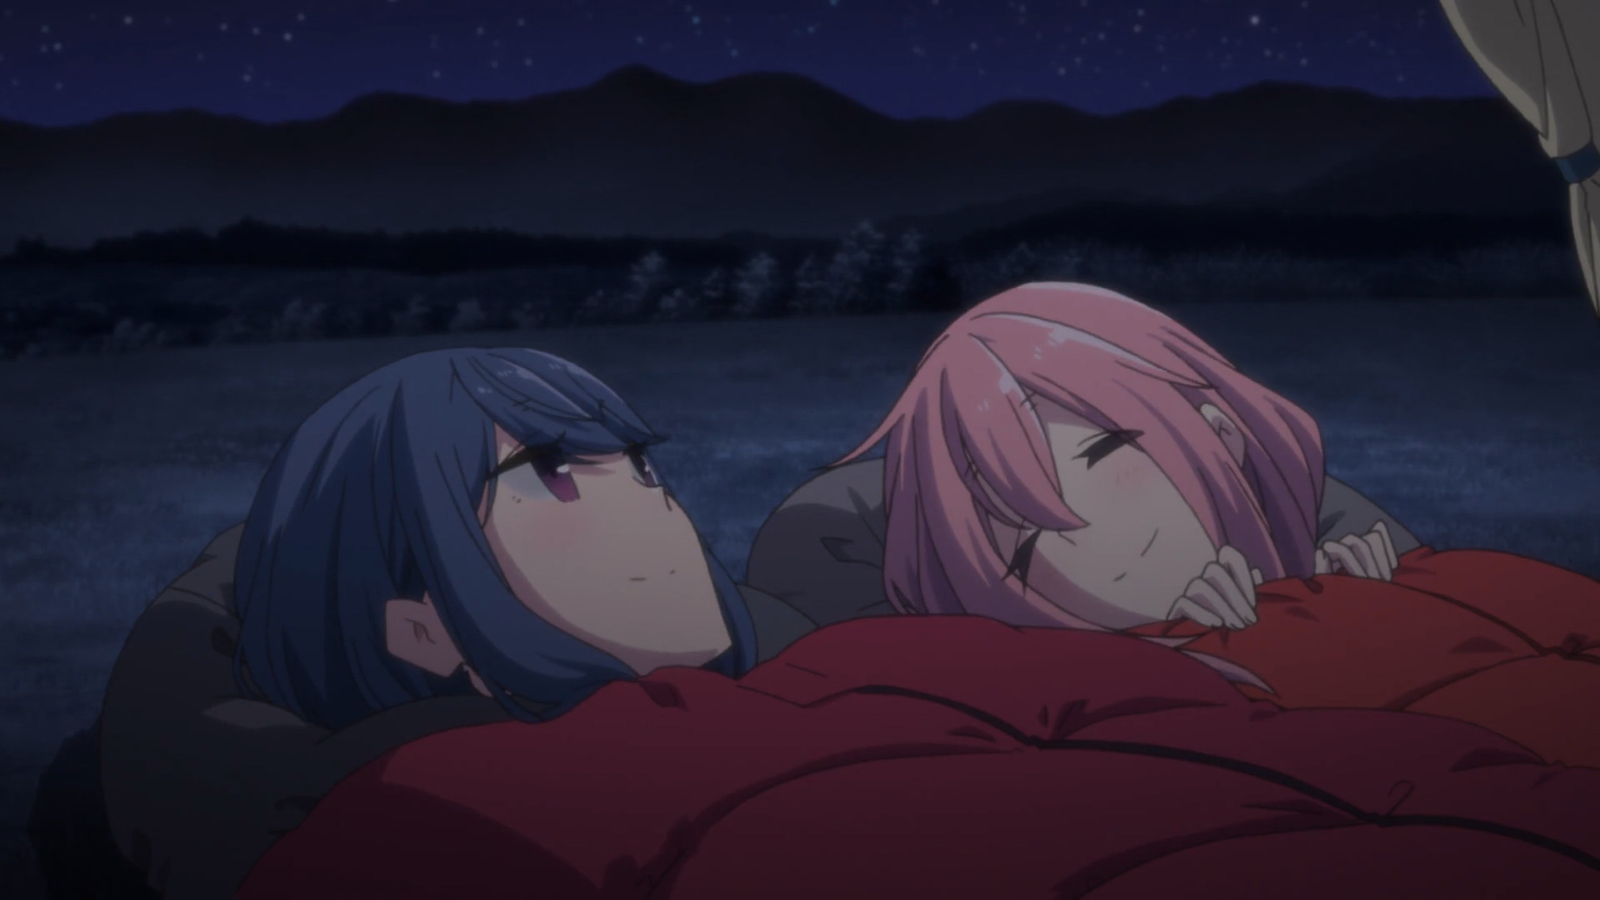 Rin and Nadeshiko camping together under the stars